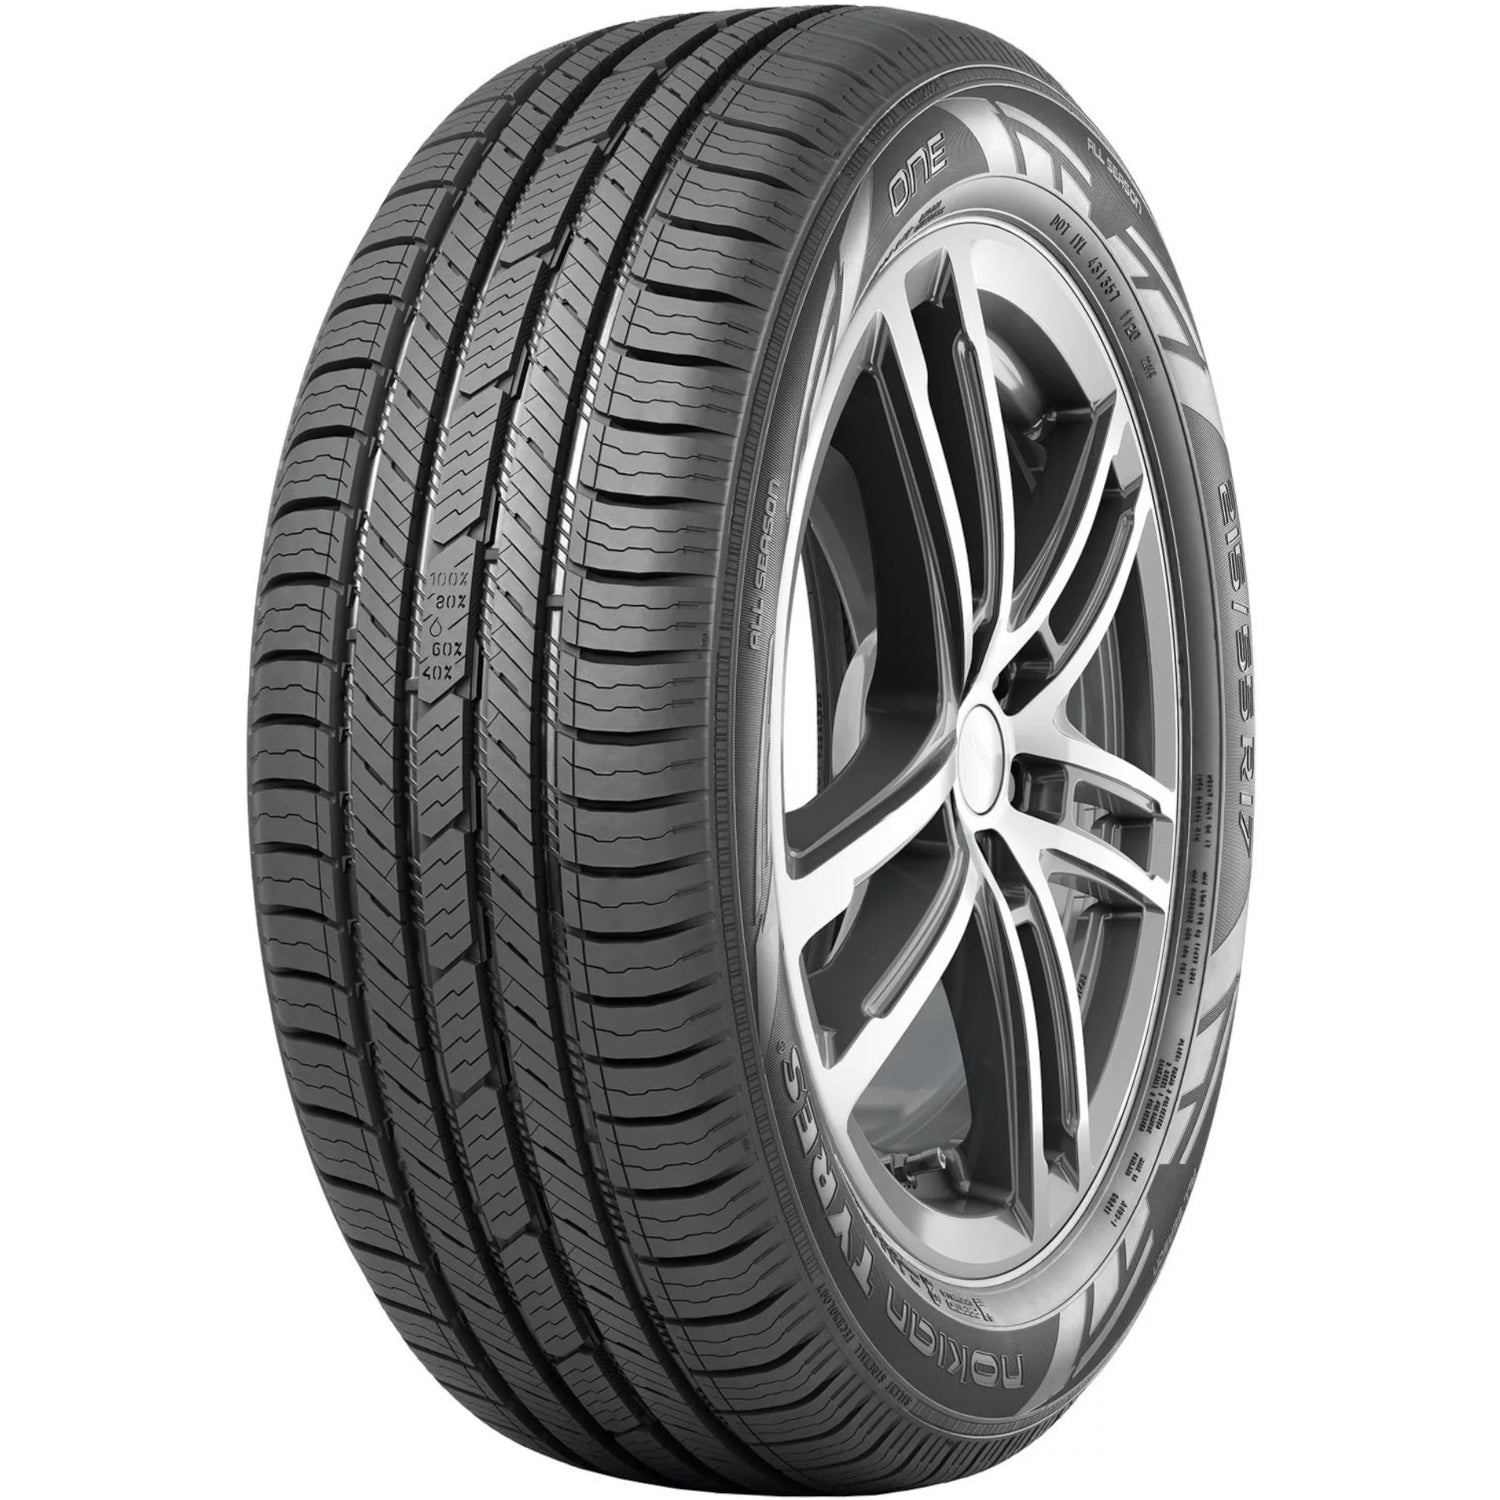 NOKIAN ONE 225/65R16 (27.5X8.9R 16) Tires